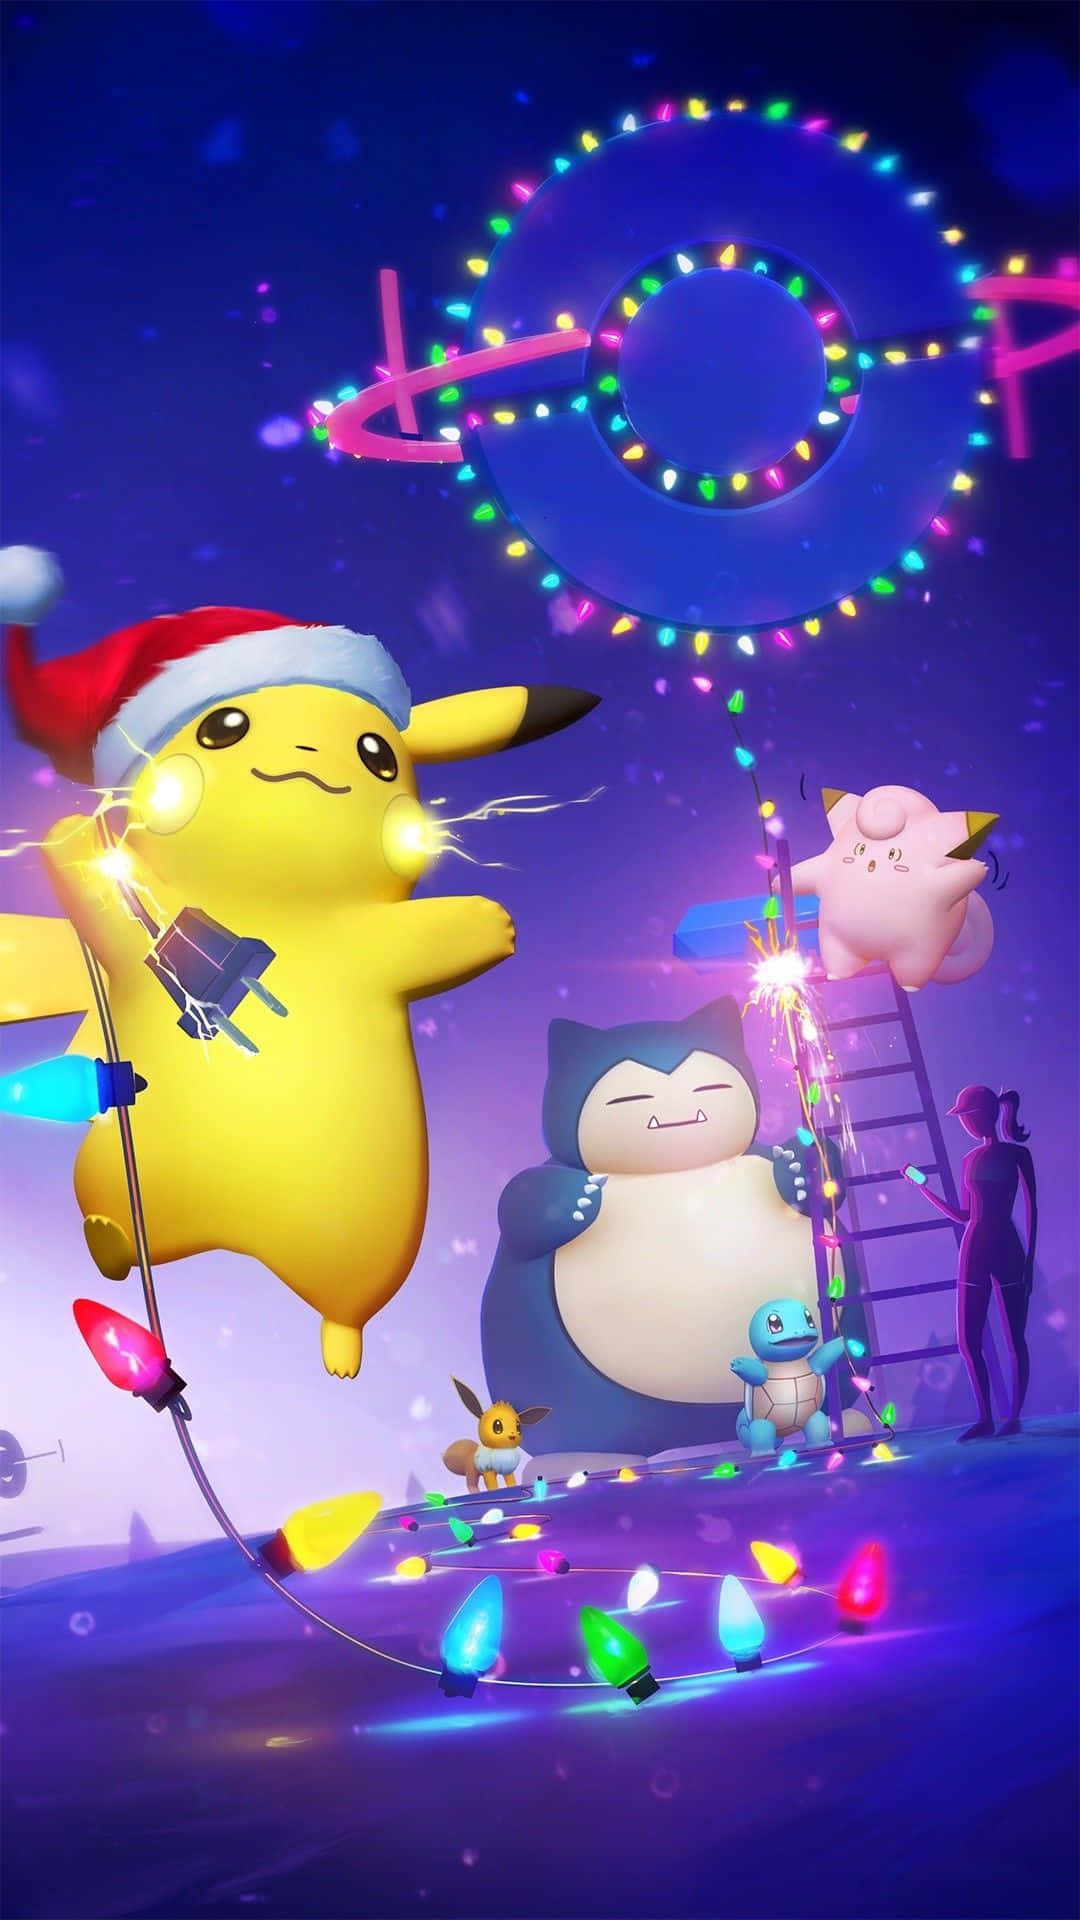 Pokemon Christmas - Ps4 - Ps4 - Ps4 - Ps4 - Ps